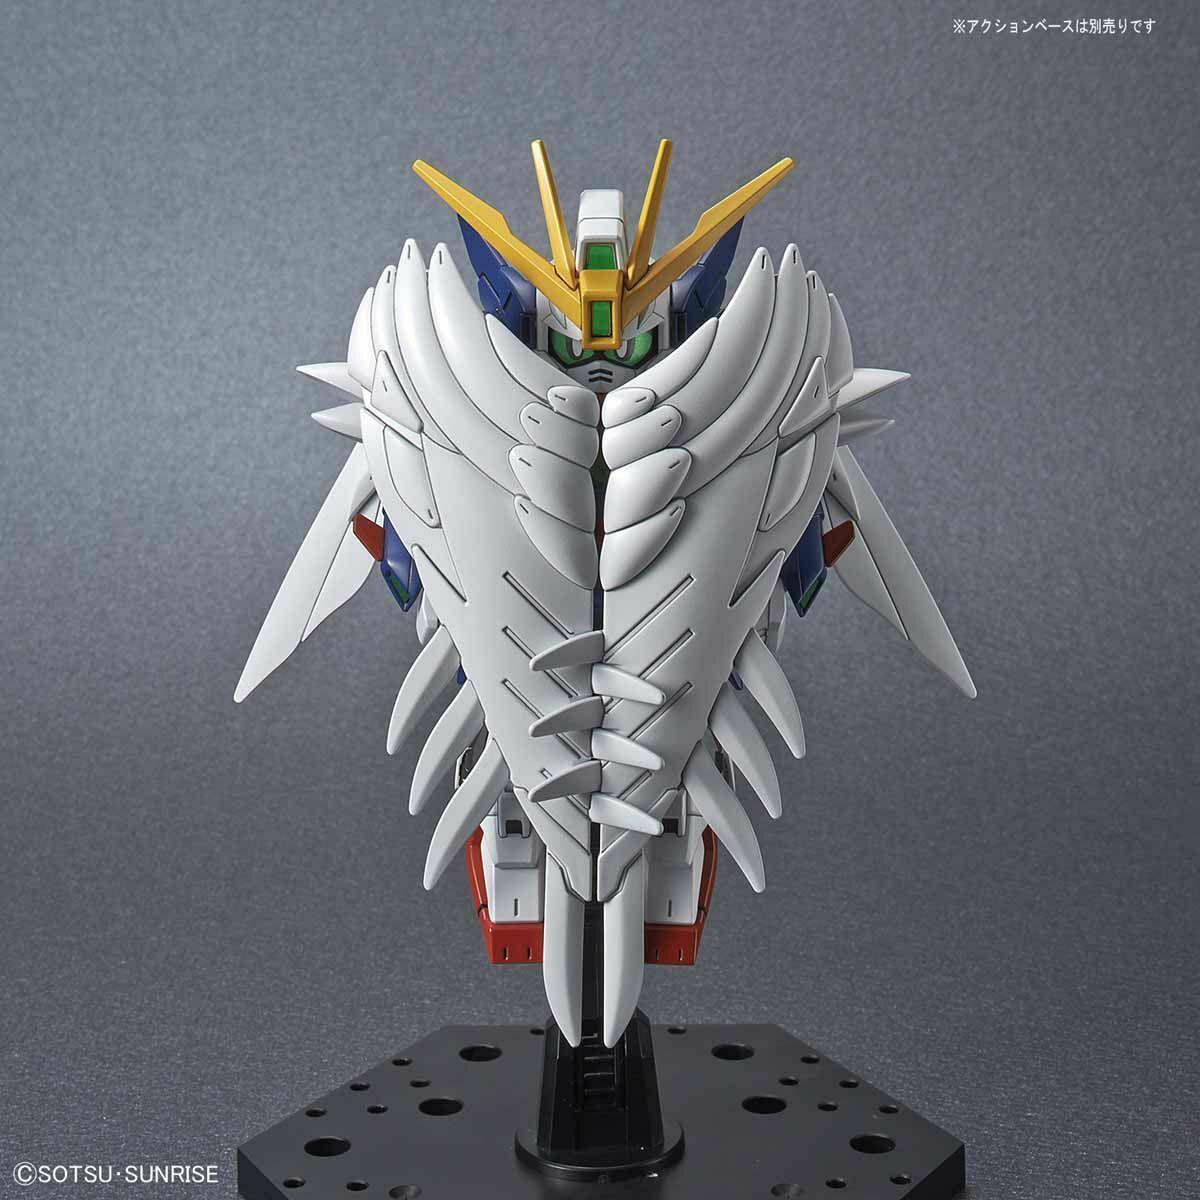 Gunpla SD Gundam Cross Silhouette Wing Gundam Zero EW-Bandai-Ace Cards &amp; Collectibles